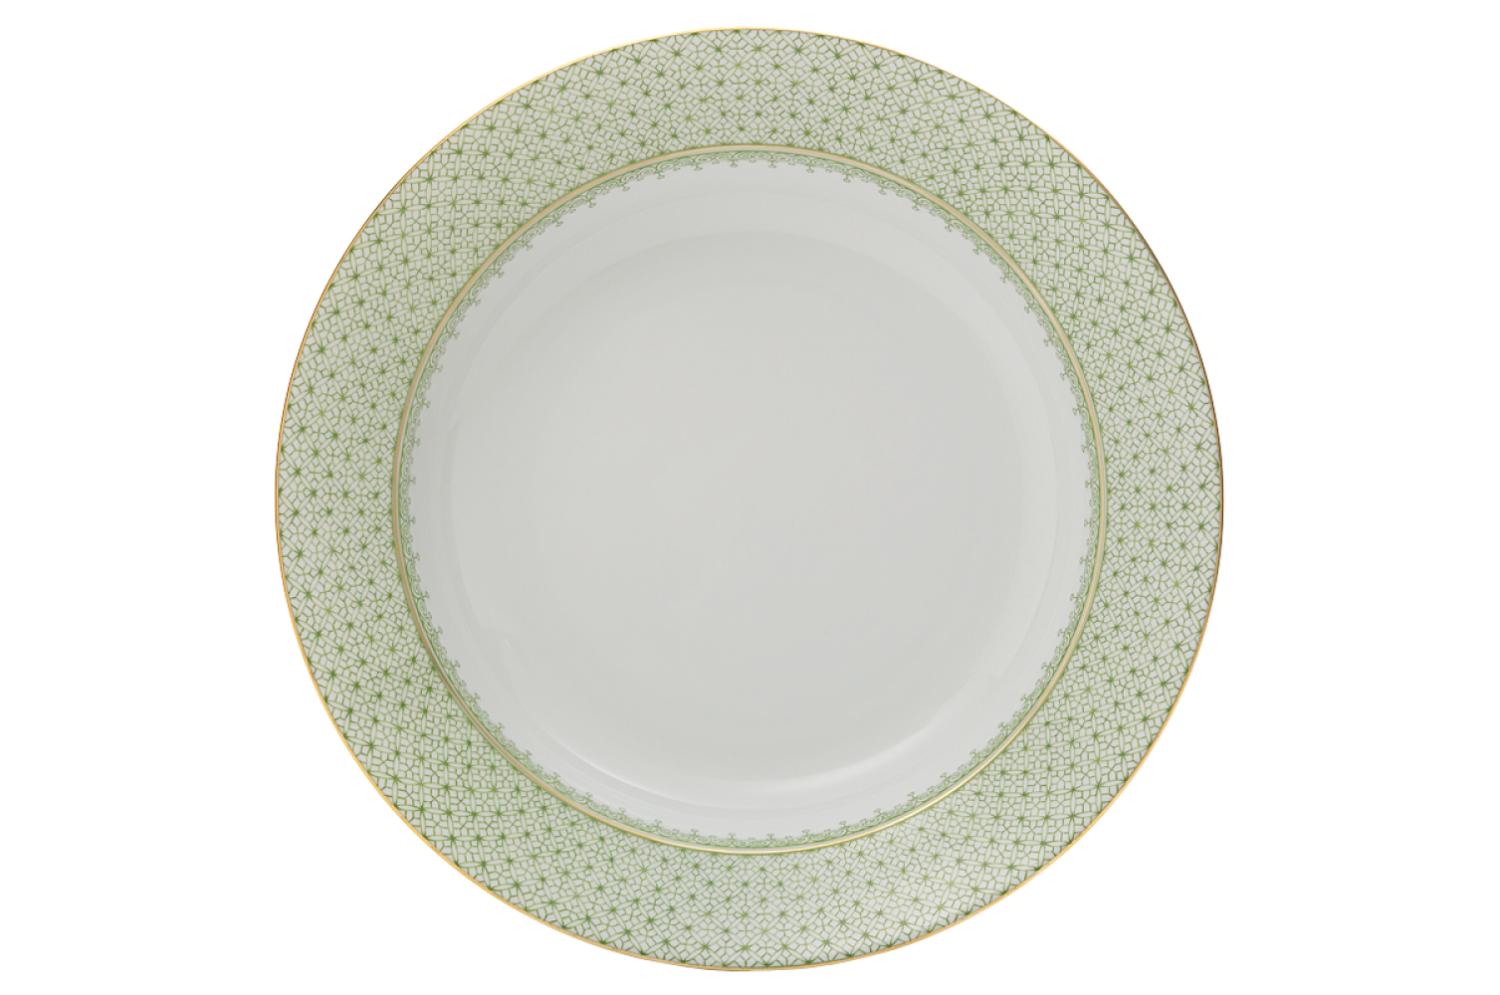 Apple Green Lace Rim Soup Plate